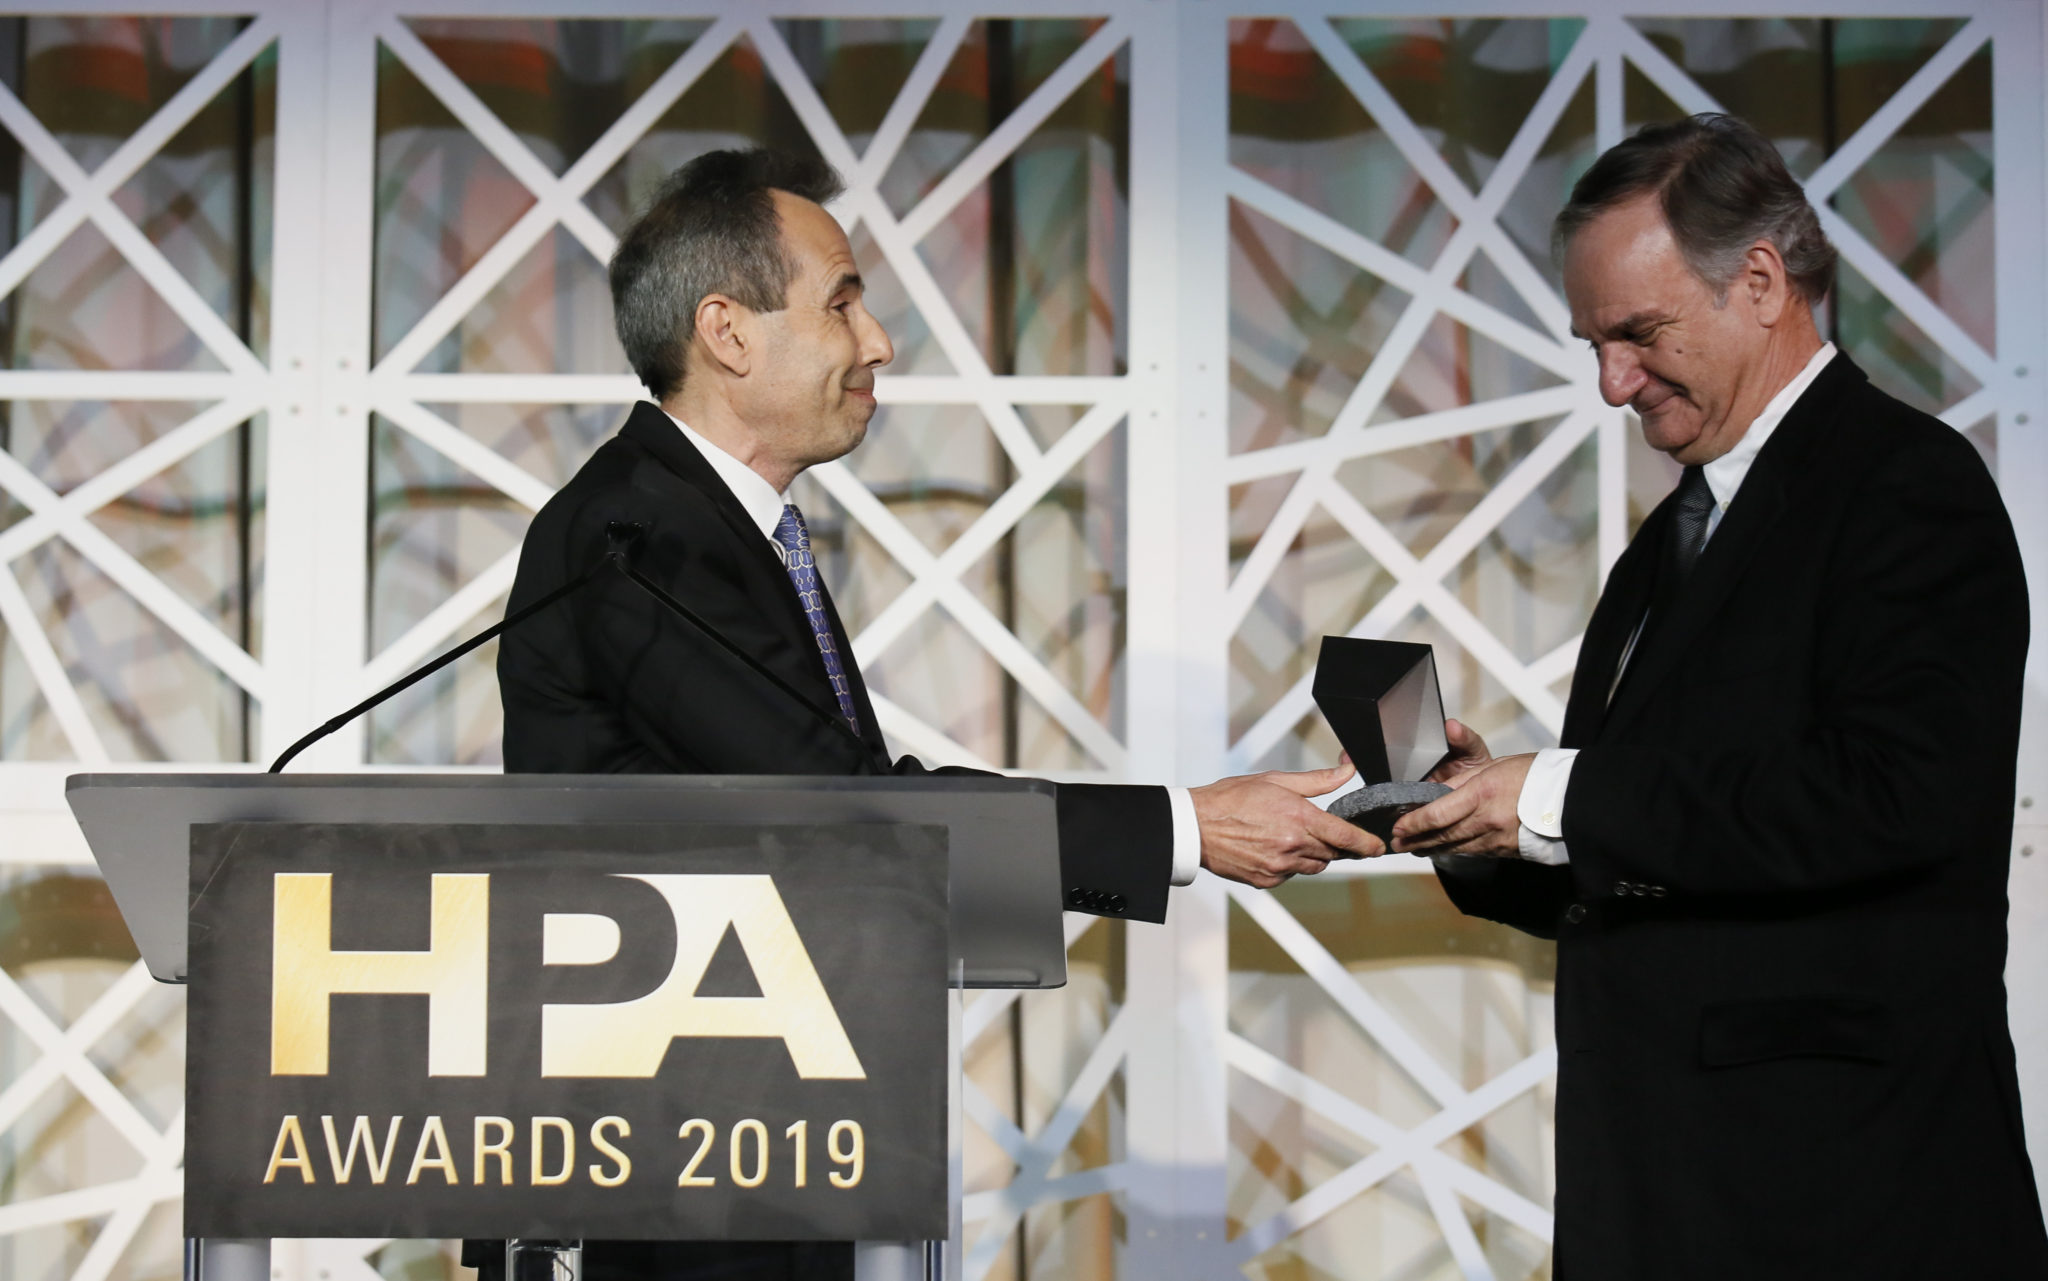 Robert Legato, ASC, receives the HPA's Lifetime Achievement Award.